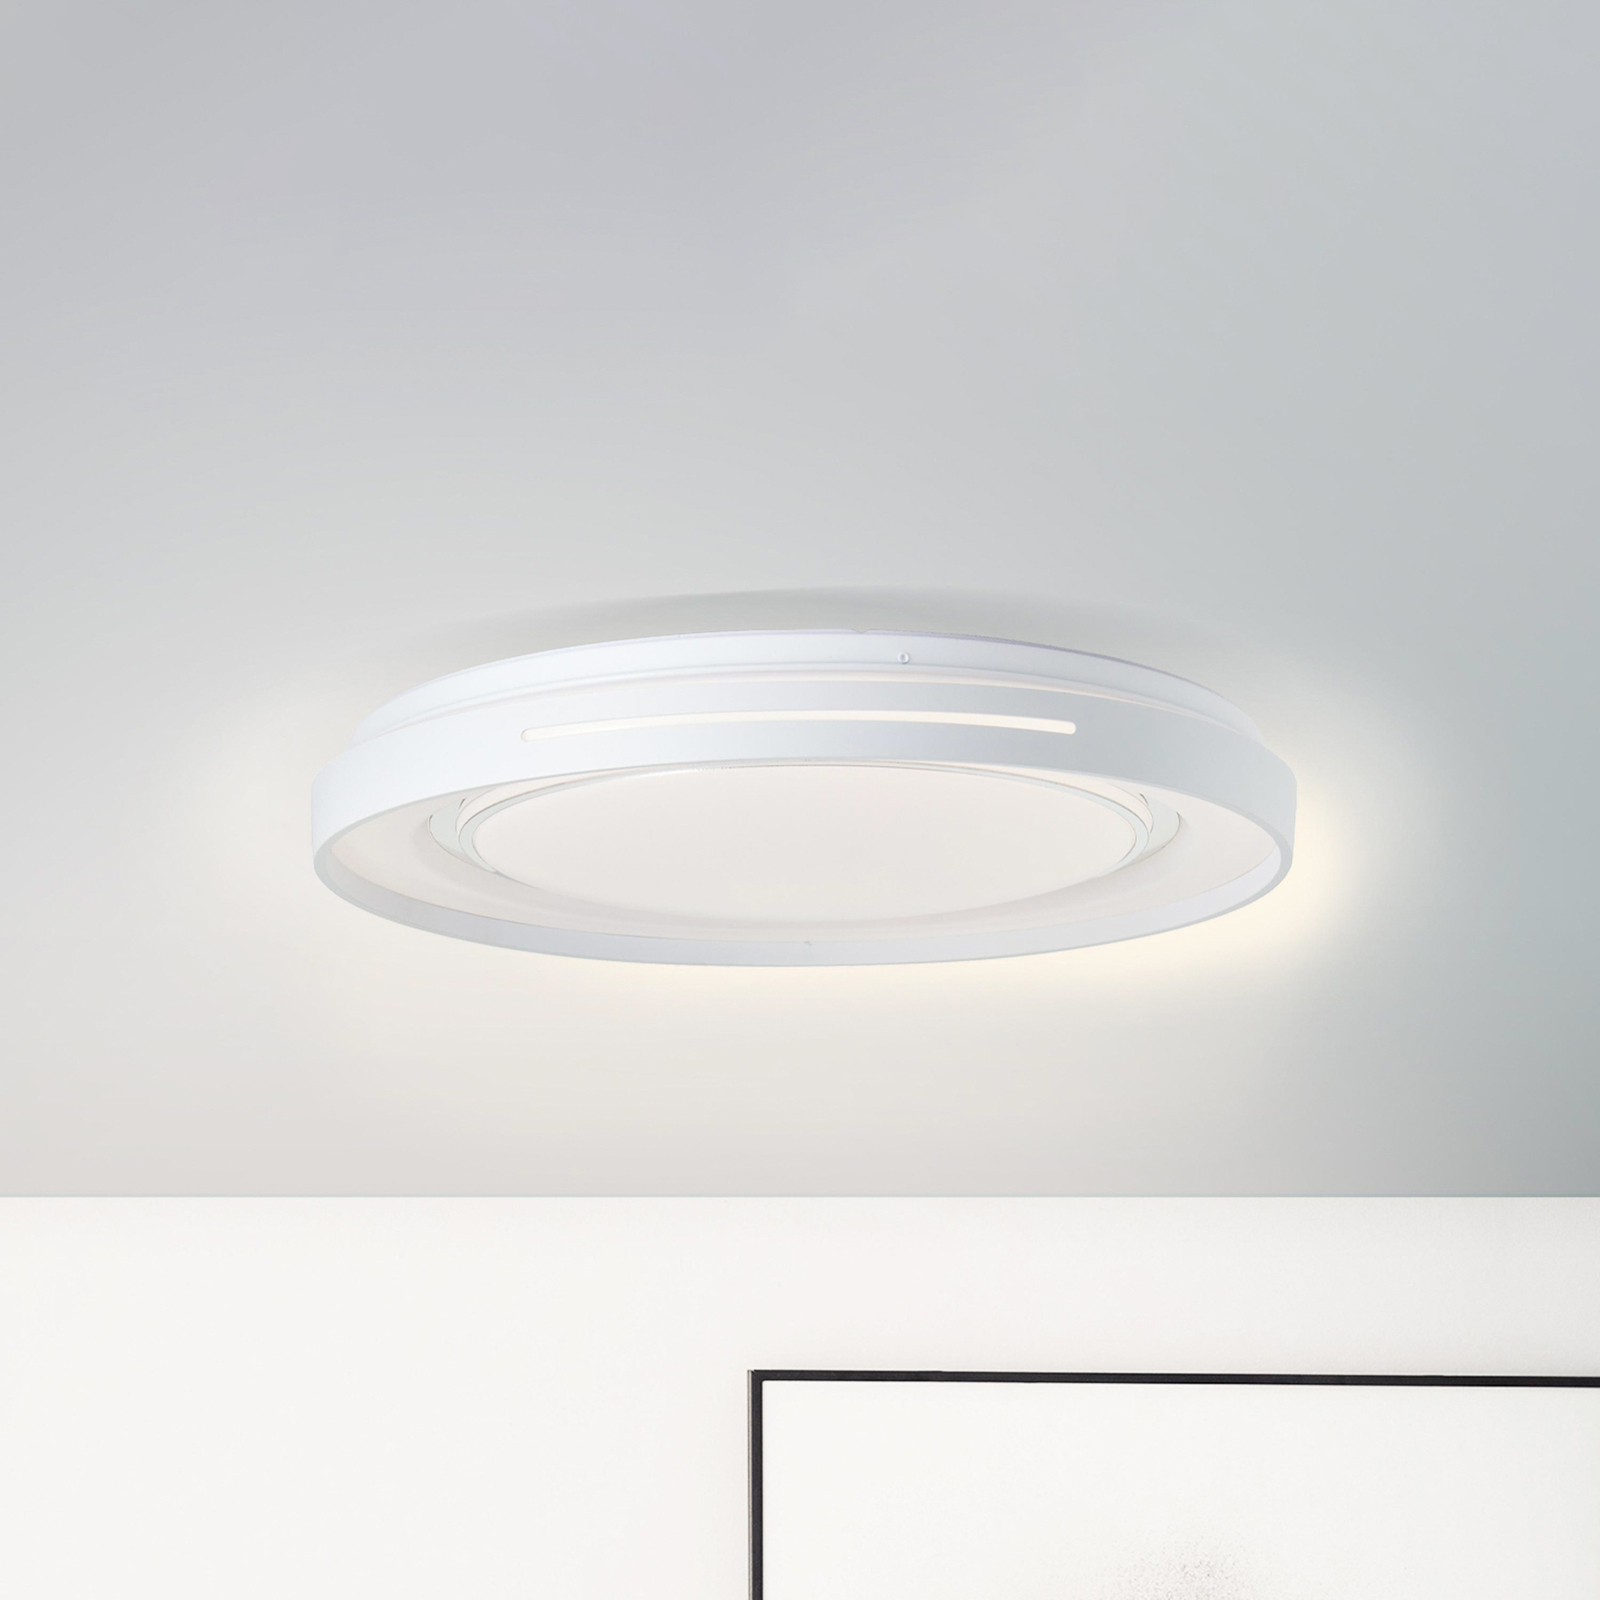 LED stropní svítidlo Barty, bílá/chrom, Ø 48,5 cm, CCT, kov